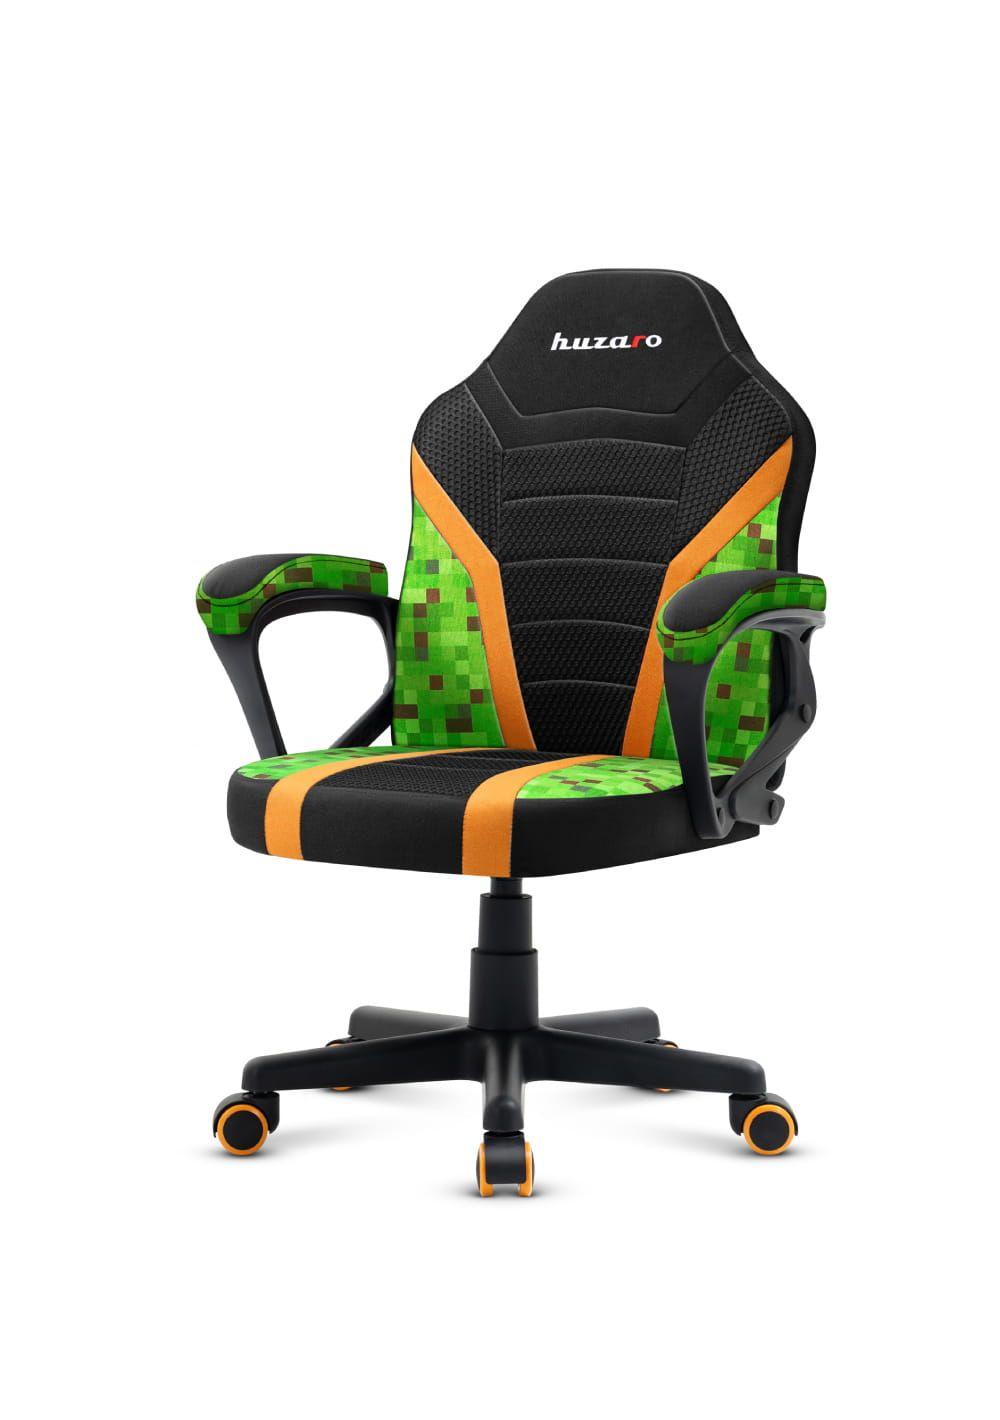 Gaming chair for children Huzaro Ranger 1.0 Pixel Mesh